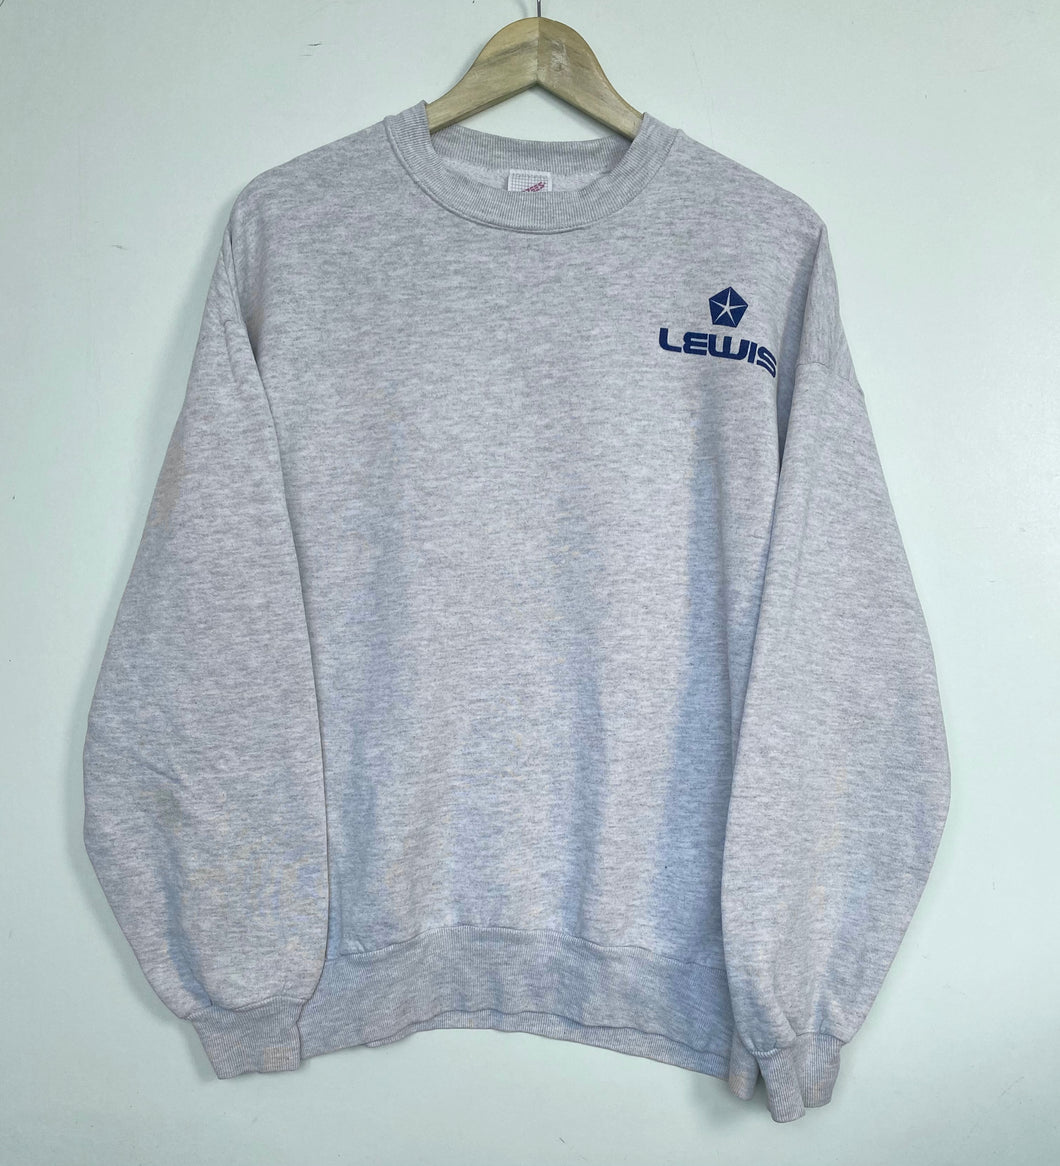 Printed sweatshirt (XL)